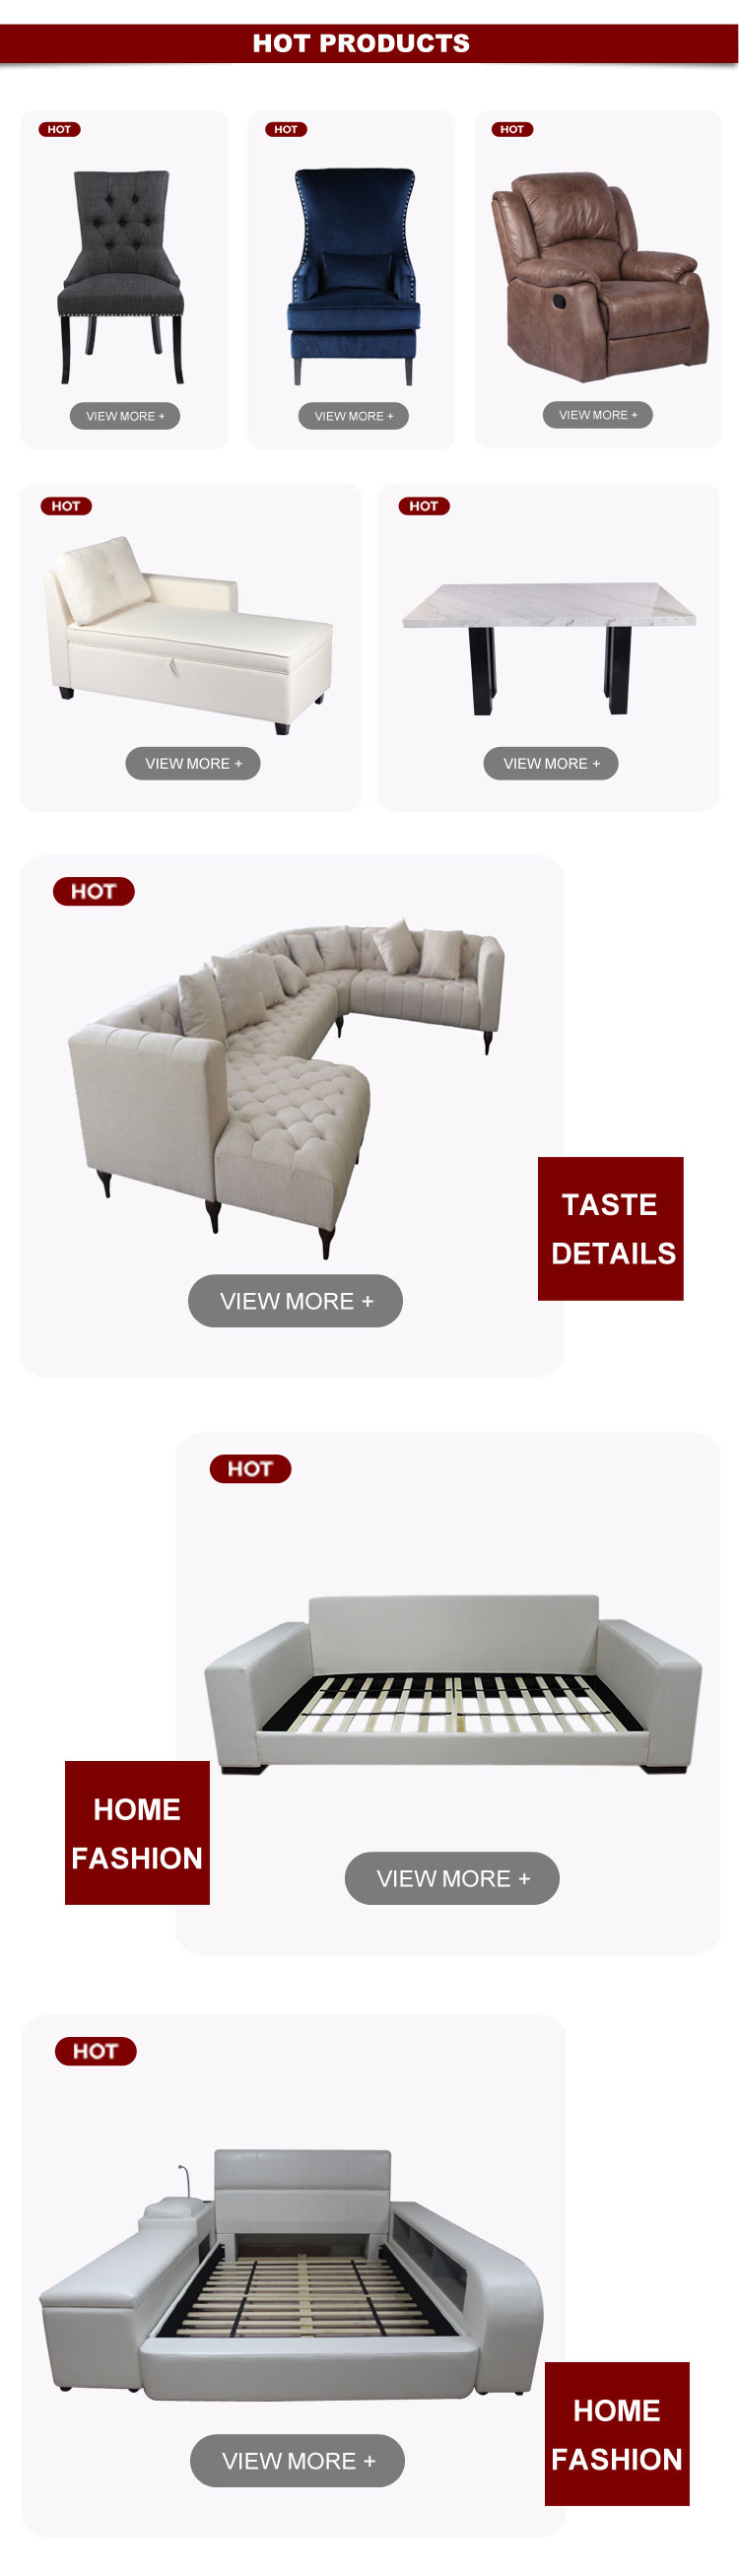 Microfiber Couch Ashley Furniture Modern - - Kingbird Furniture Company 18